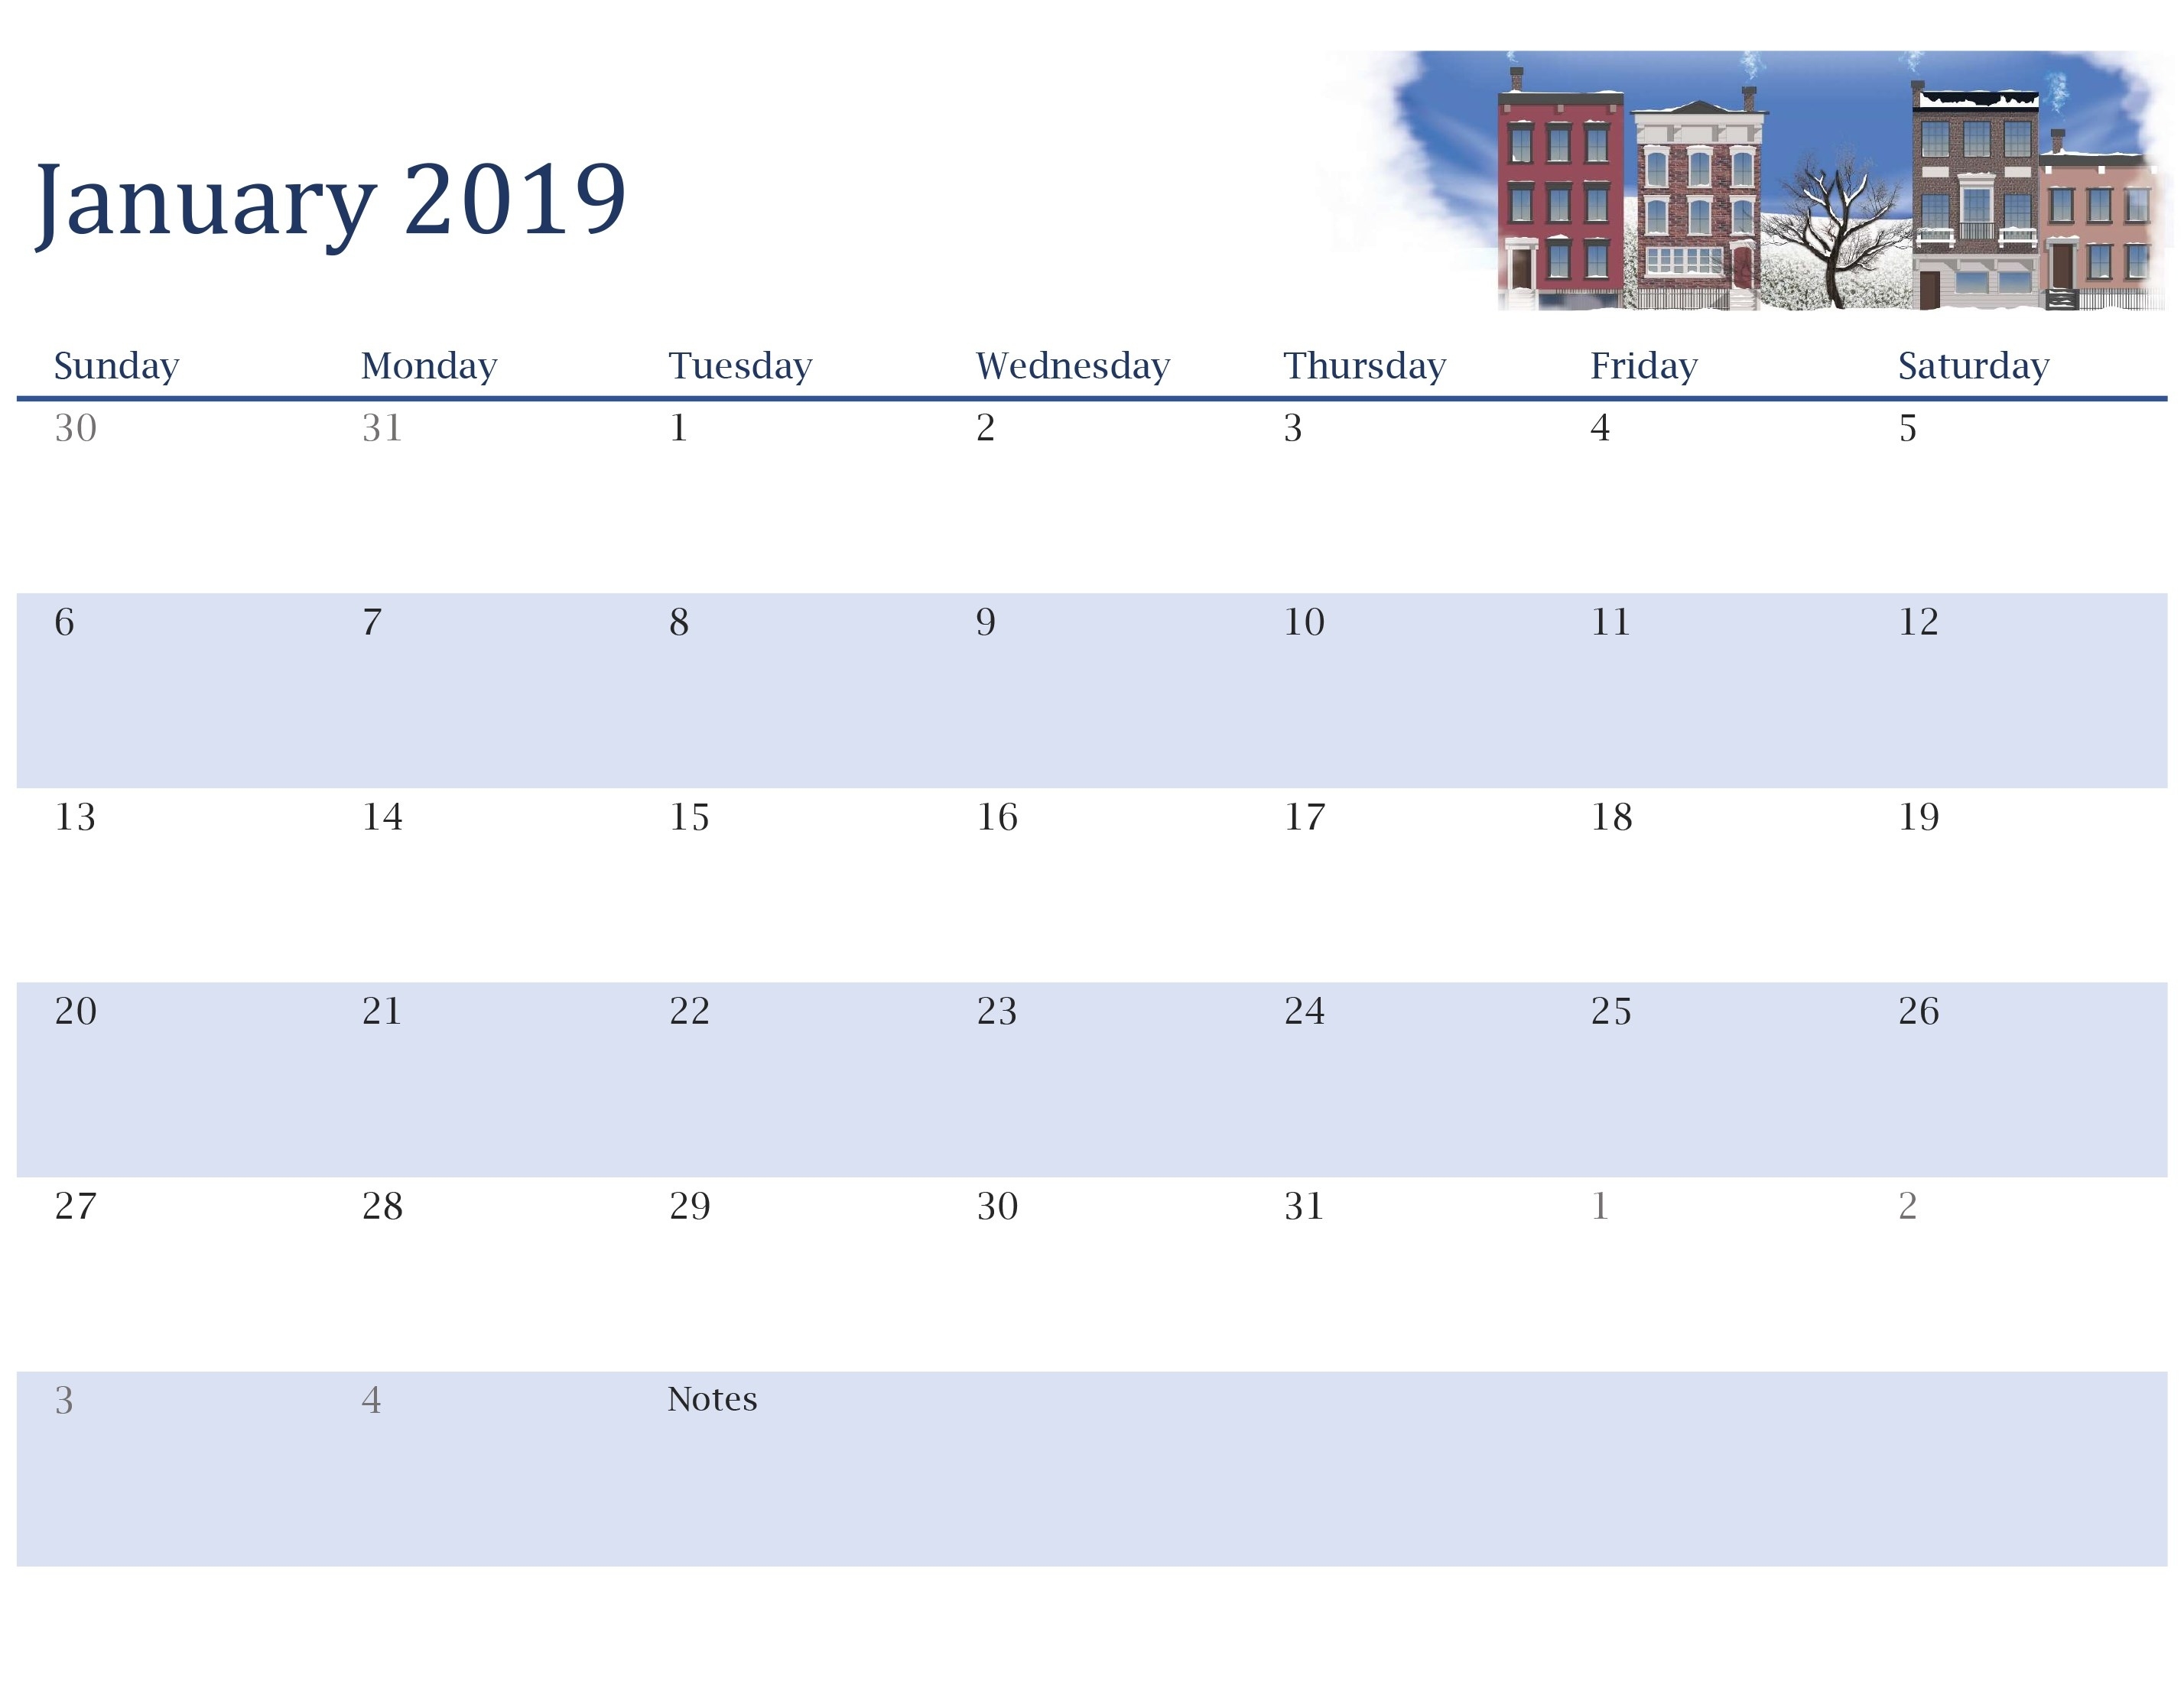 Seasonal Illustrated Any Year Calendar Calendar Template Any Year